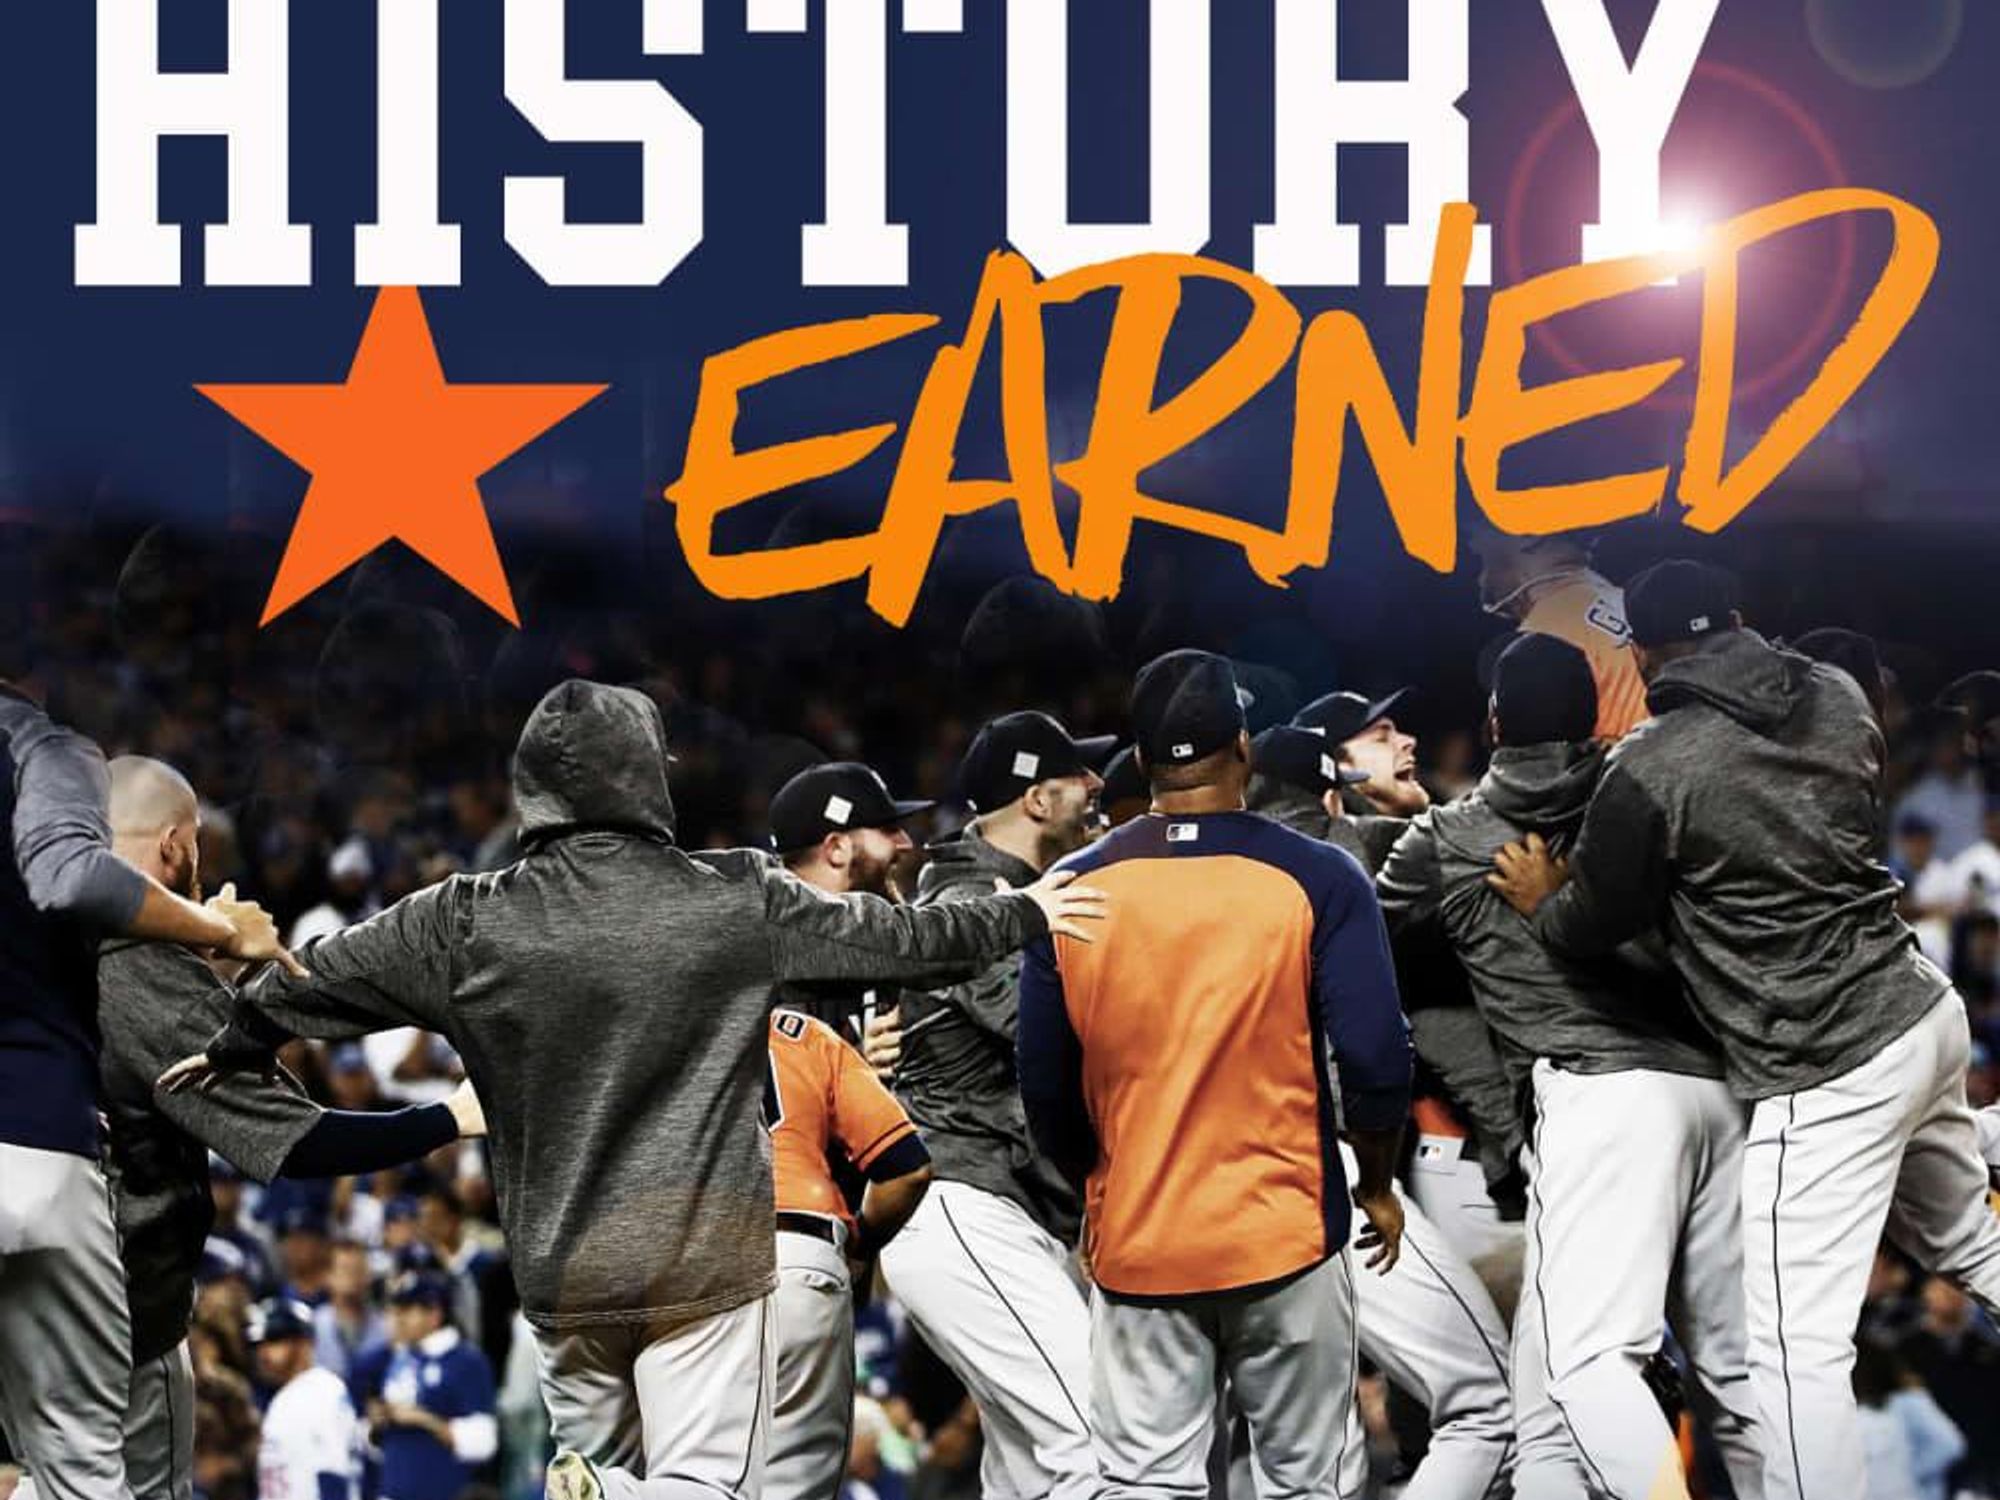 History Earned, World Series audiobook, Astros